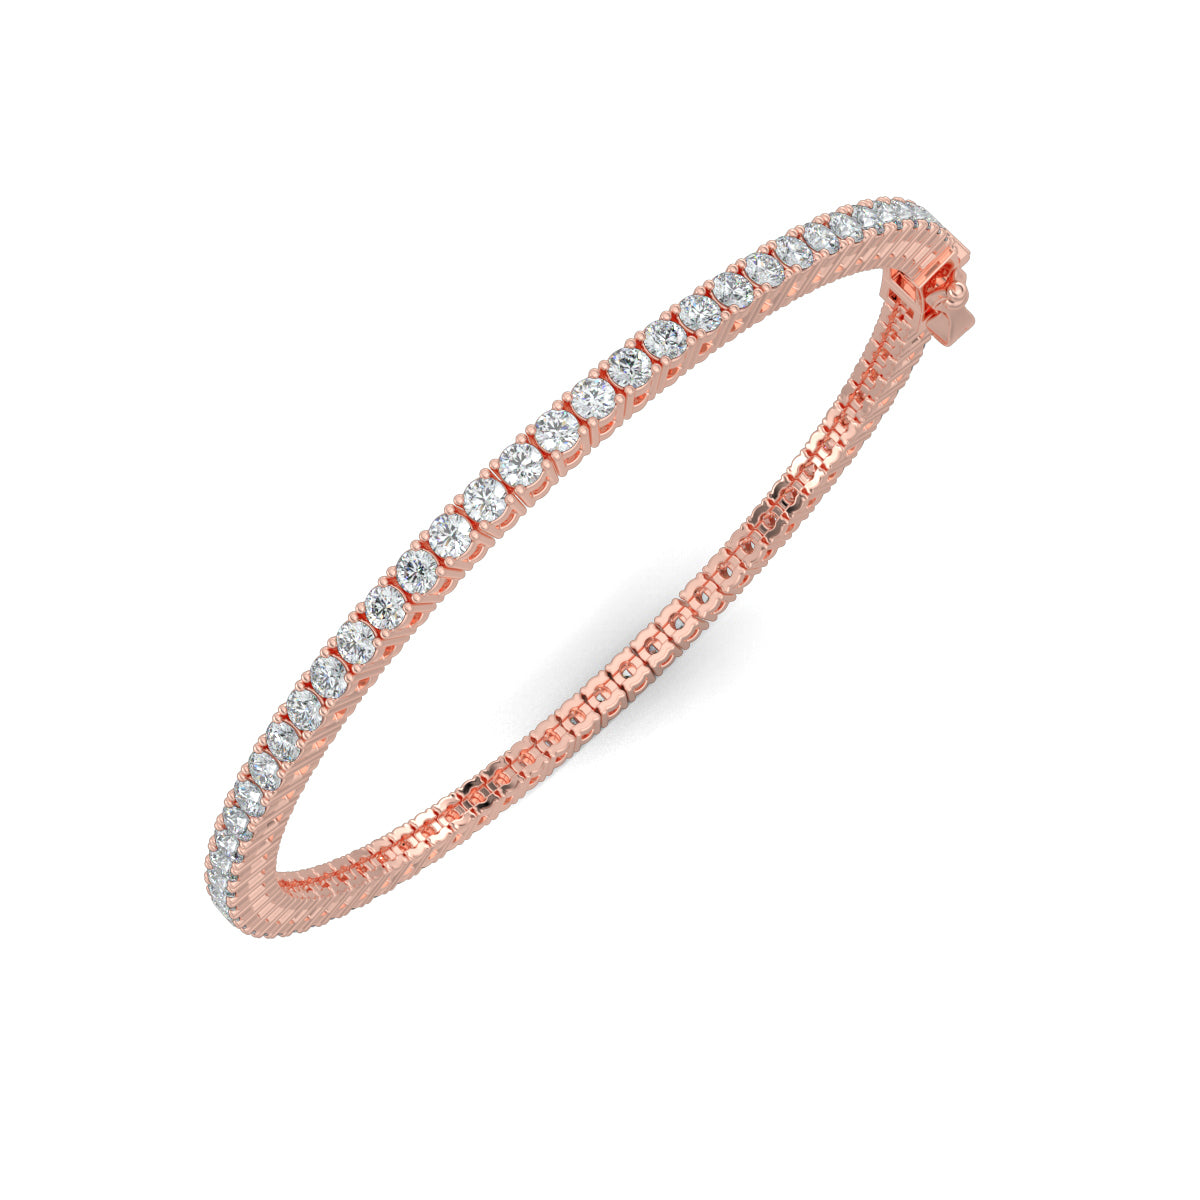 Rose Gold, Diamond Bracelet, Natural diamond bracelet, Lab-grown diamond bracelet, 15-Pointer Tennis Bracelet, tennis bracelet, prong setting, jewelry